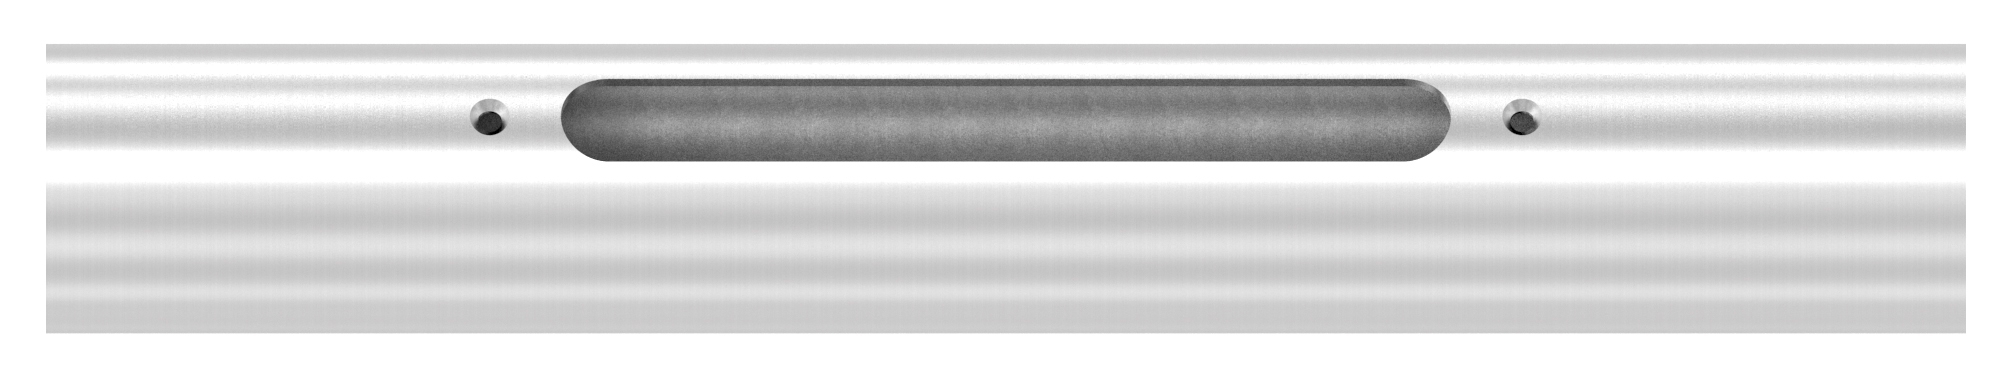 Edelstahlrohr 42,4x2,0mm für LED Module, V2A